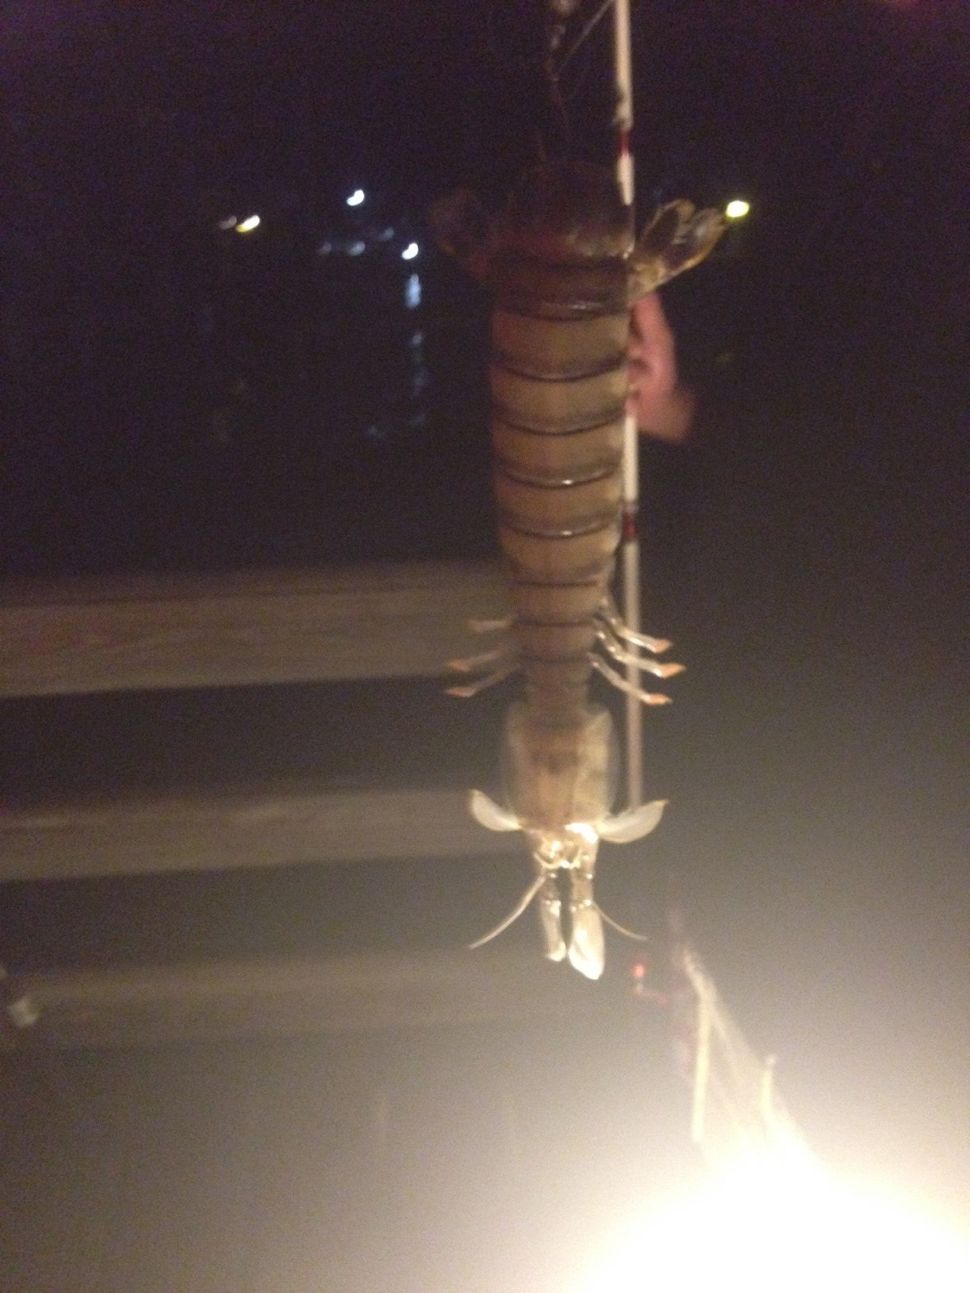 Oversized Alien-Like 'Shrimp' Caught Off Florida Is ID'ed